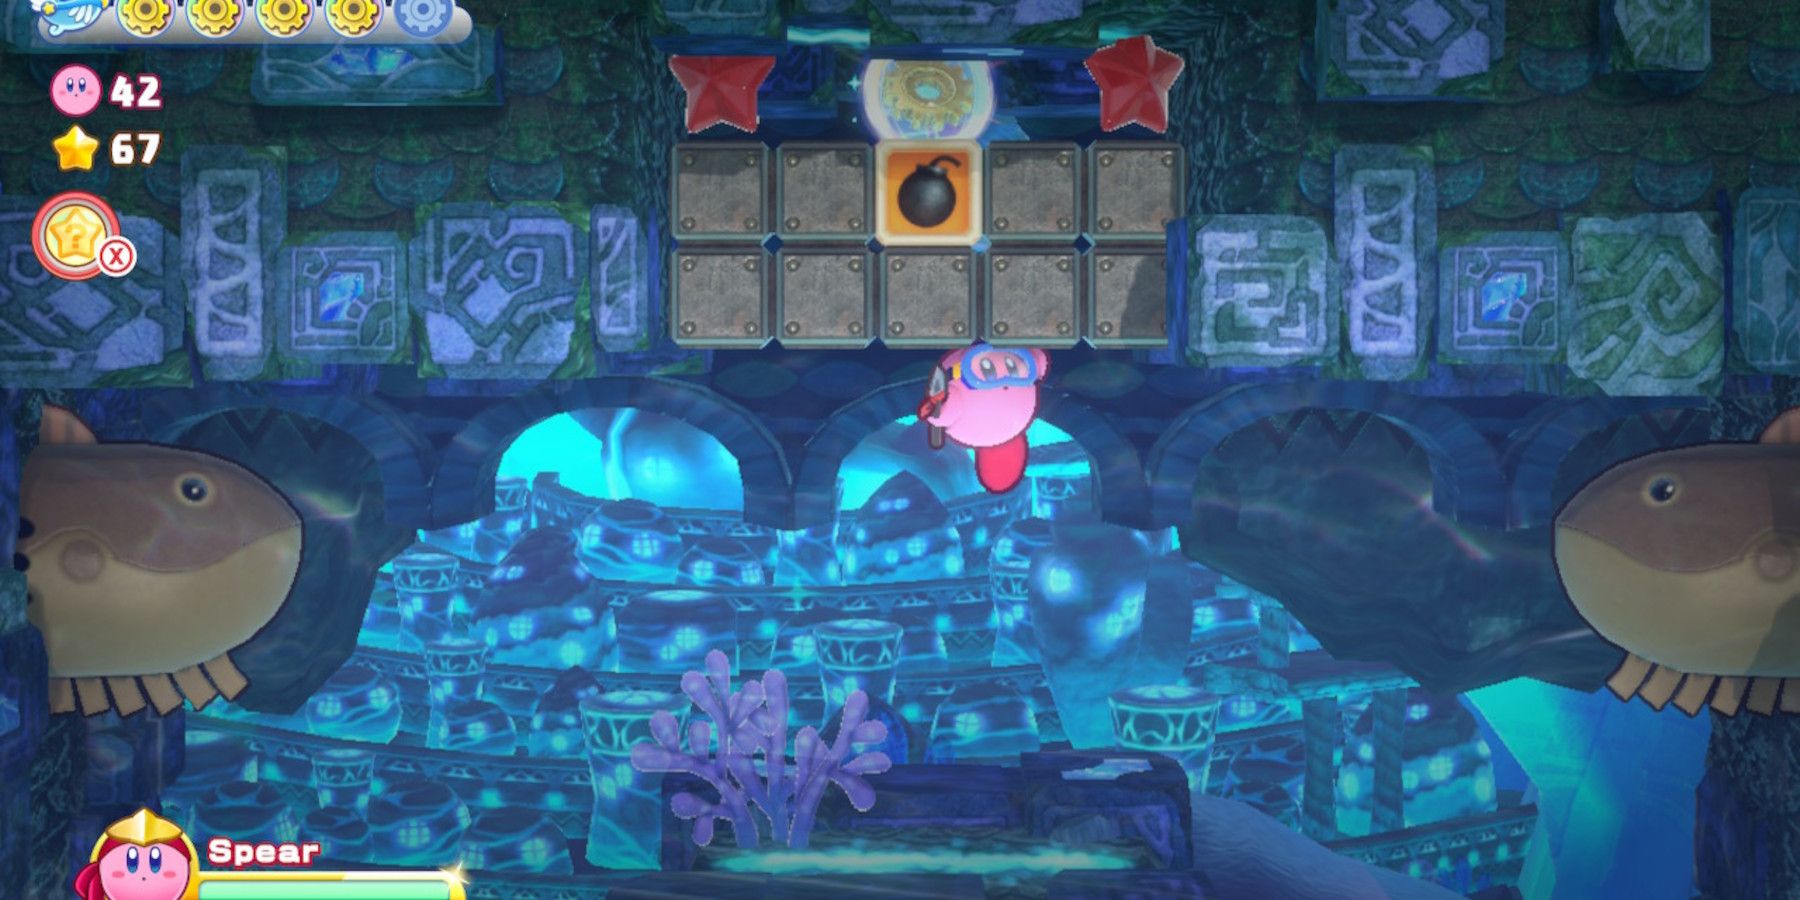 Kirbys-Return-To-Dreamland-Deluxe-All-Energy-Spheres-World-3-Level-4-B